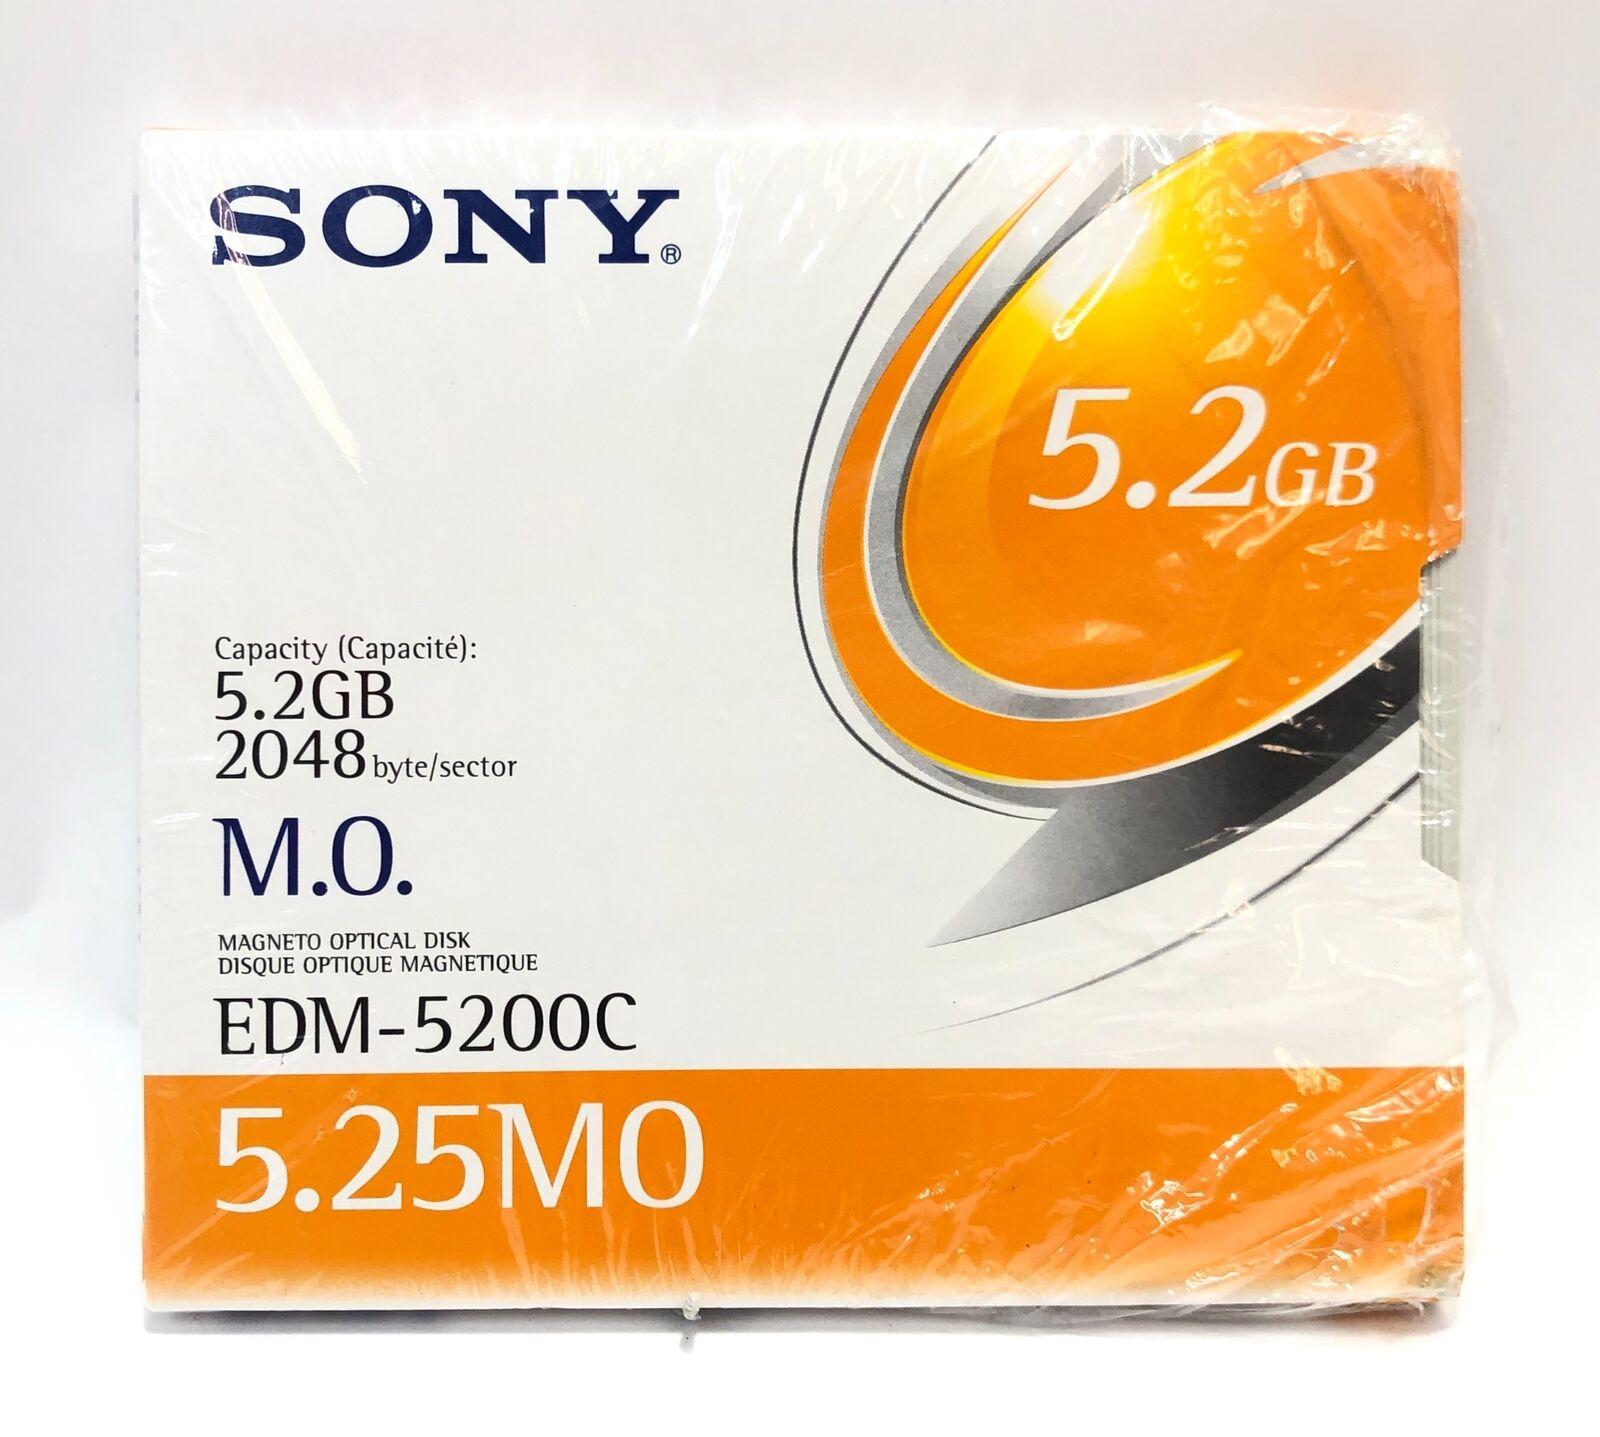 Sony Magneto Optical Disk 5.2 GB 5.25MO EDM-5200C